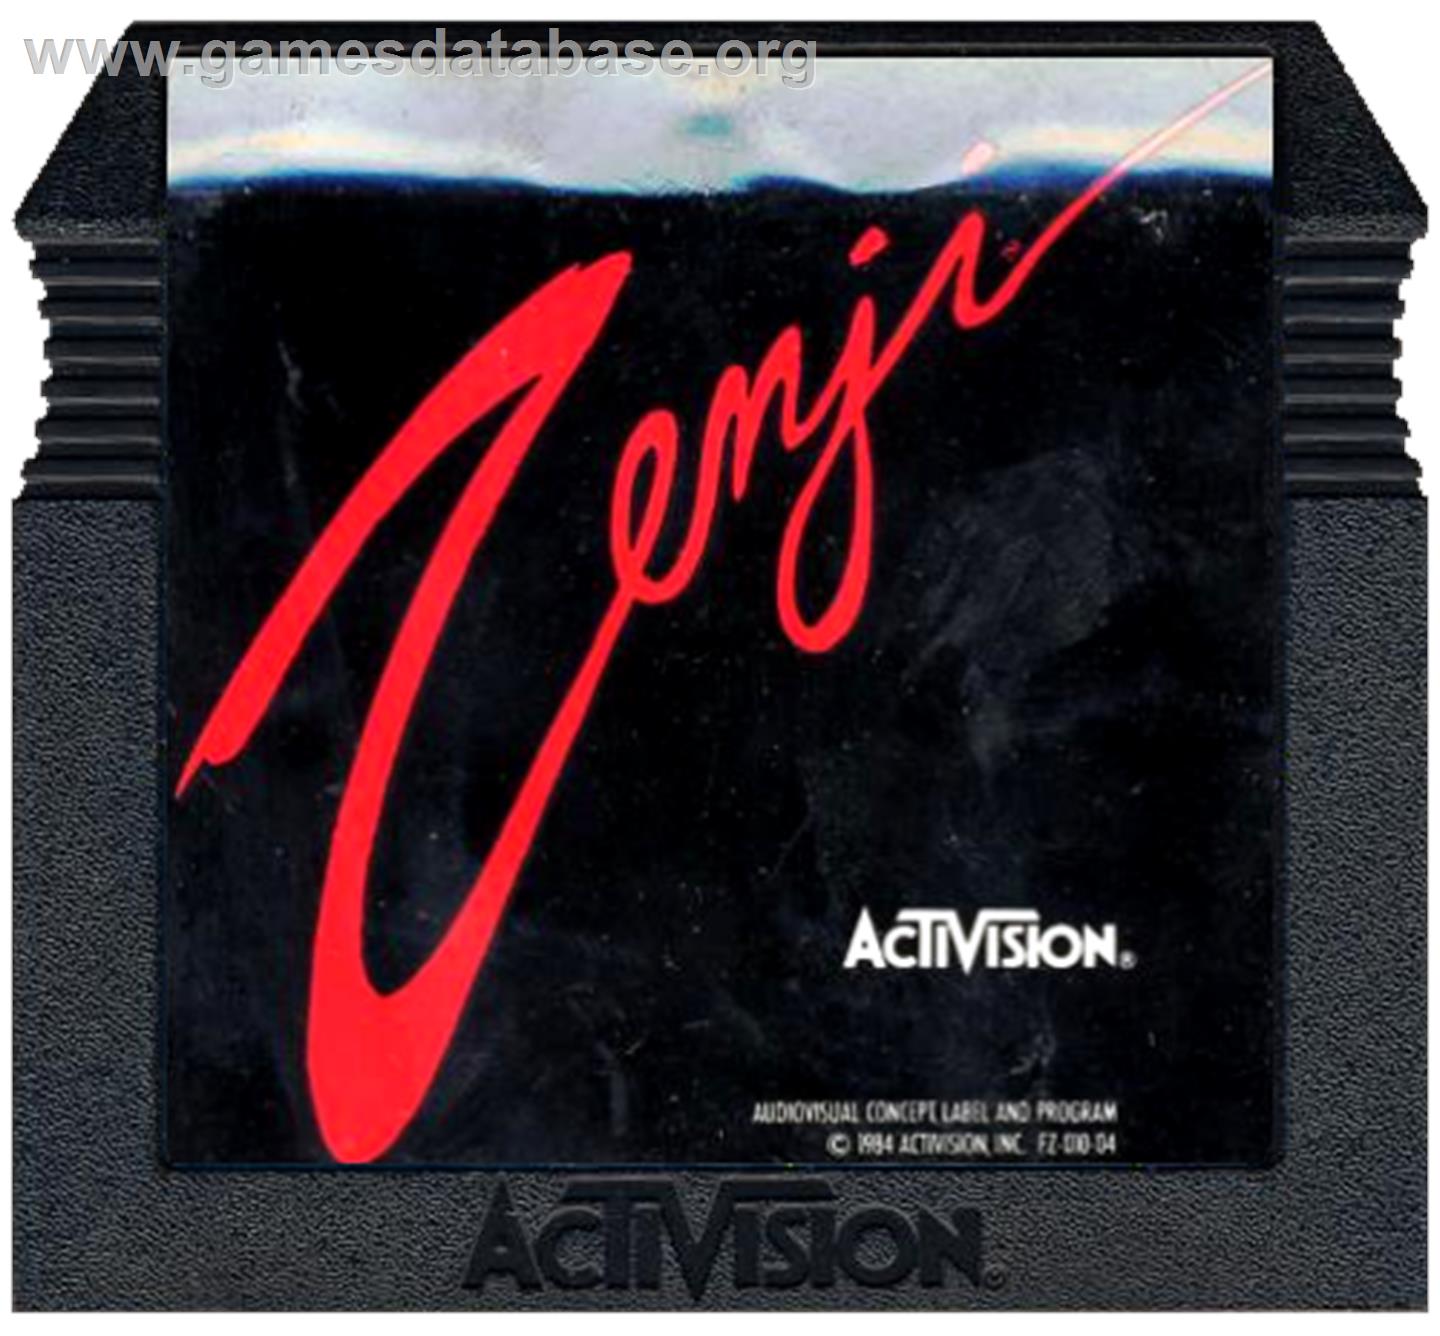 Zenji - Atari 5200 - Artwork - Cartridge